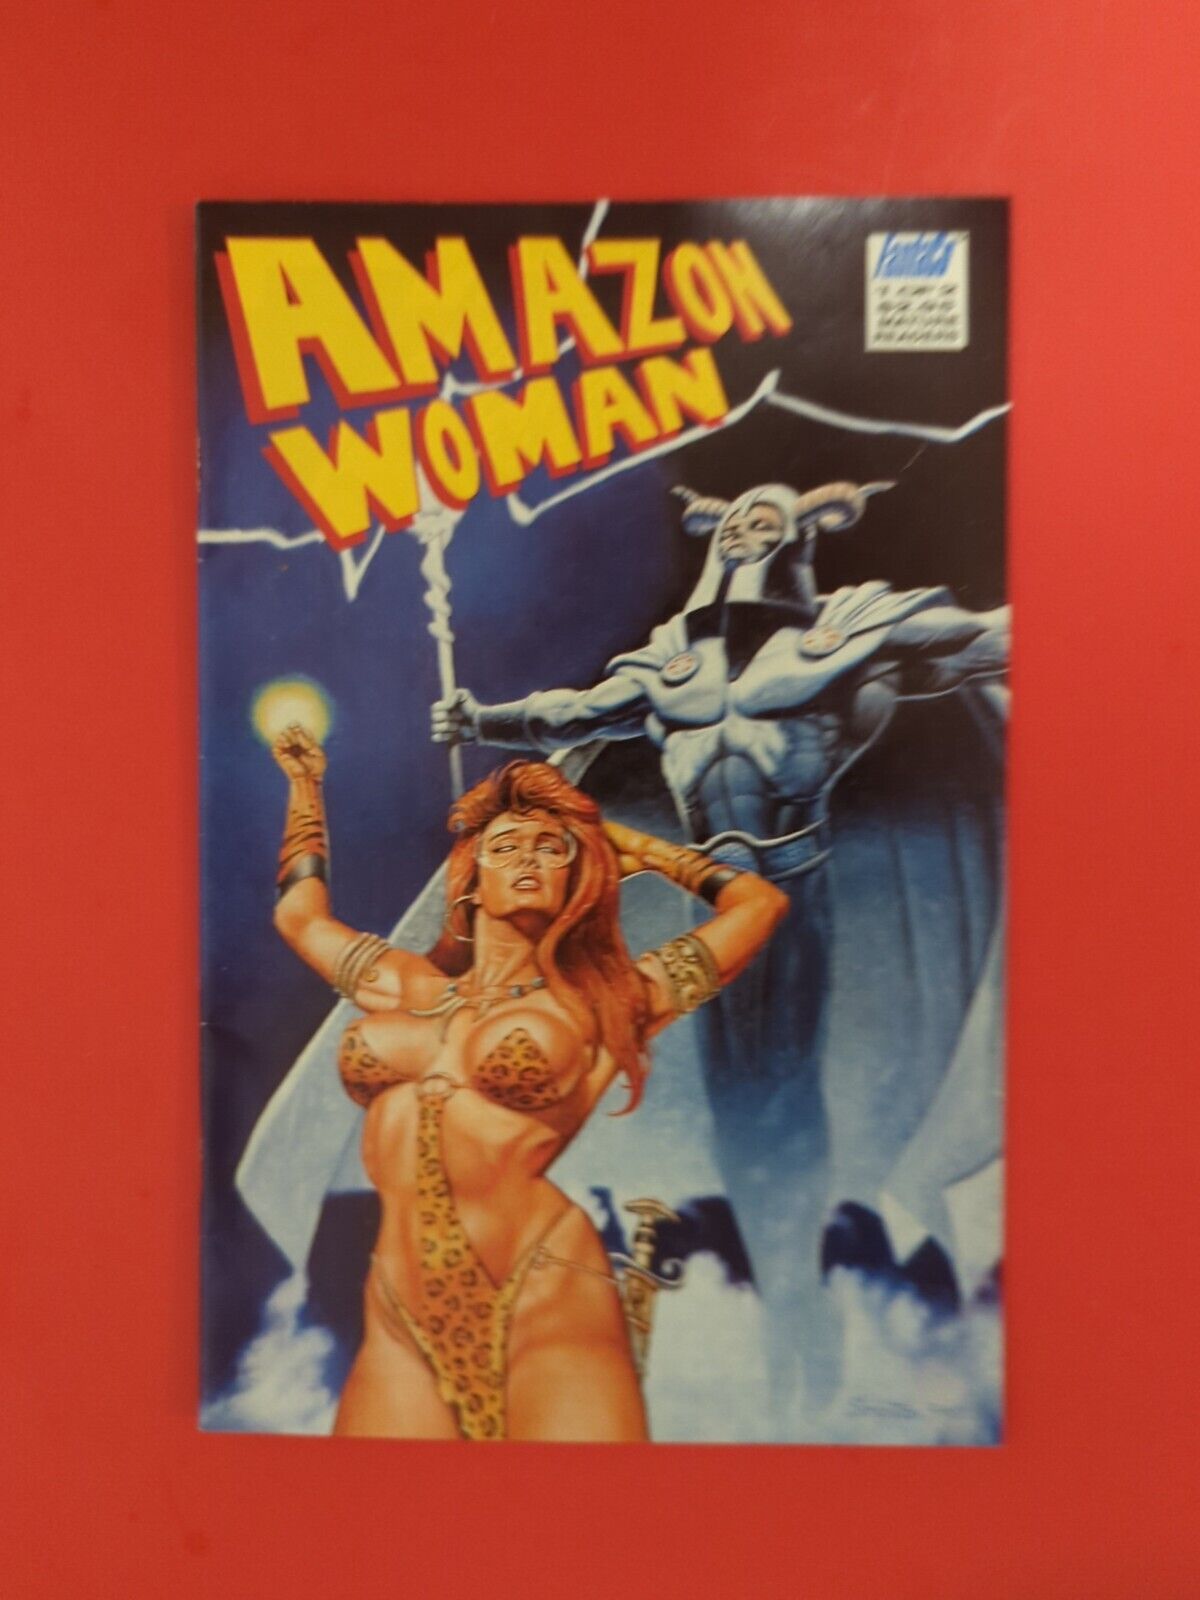  Amazon Woman #1 comic book. Tom Simonton. FantaCo 1994 (B2) RARE HTF